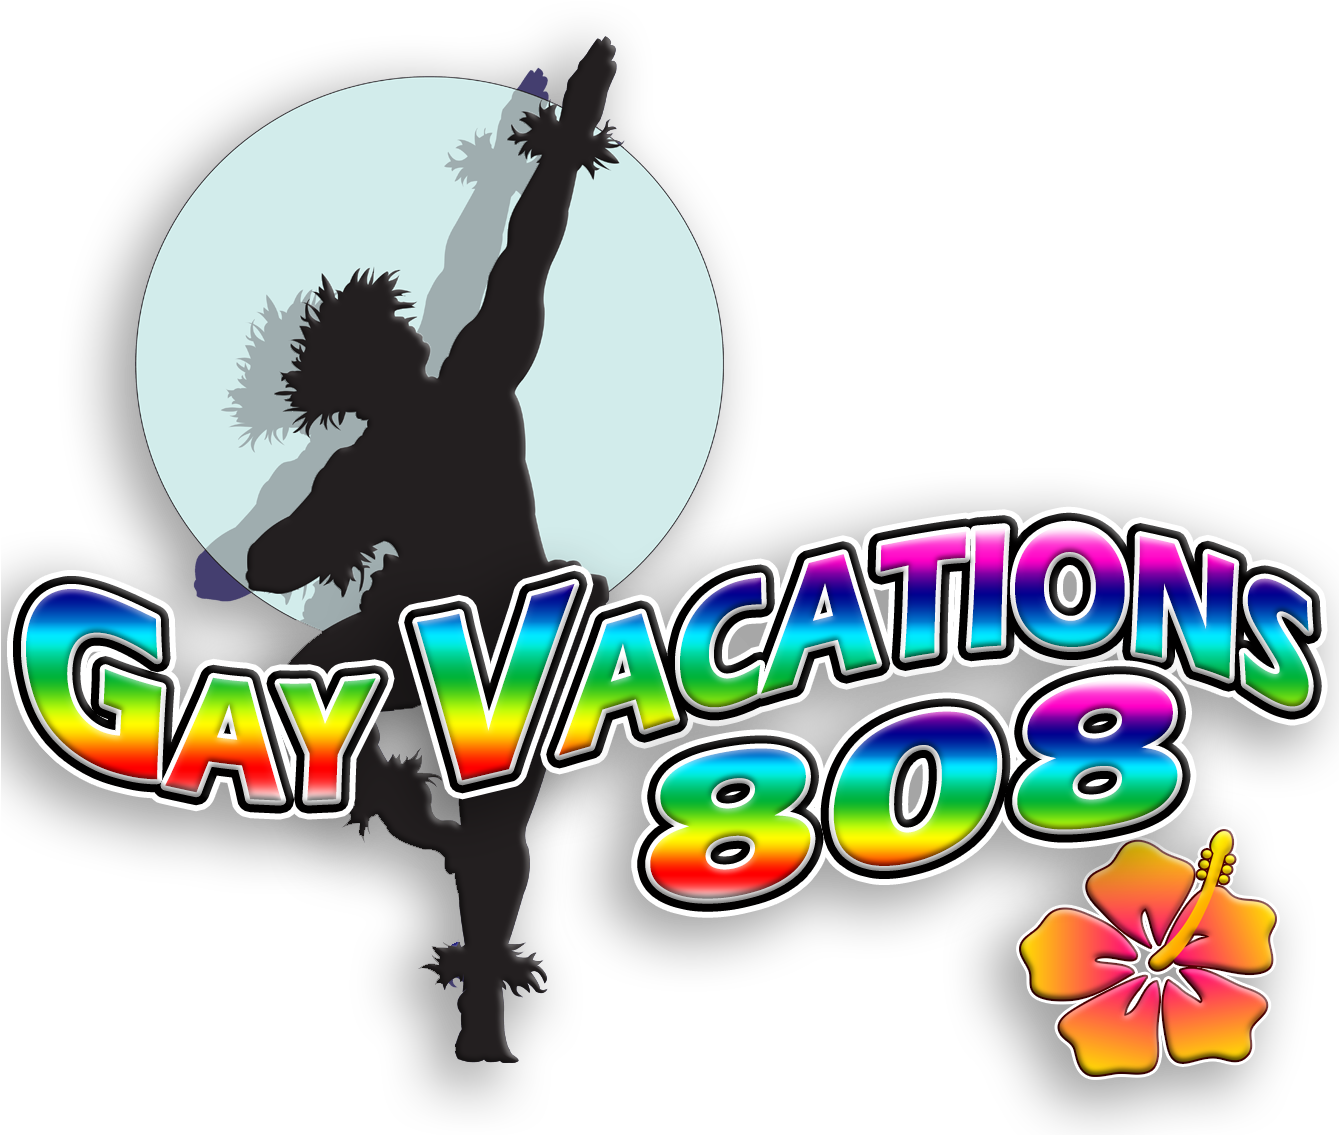 Gay Vacations '808' - Bboy Windmill (1338x1150)